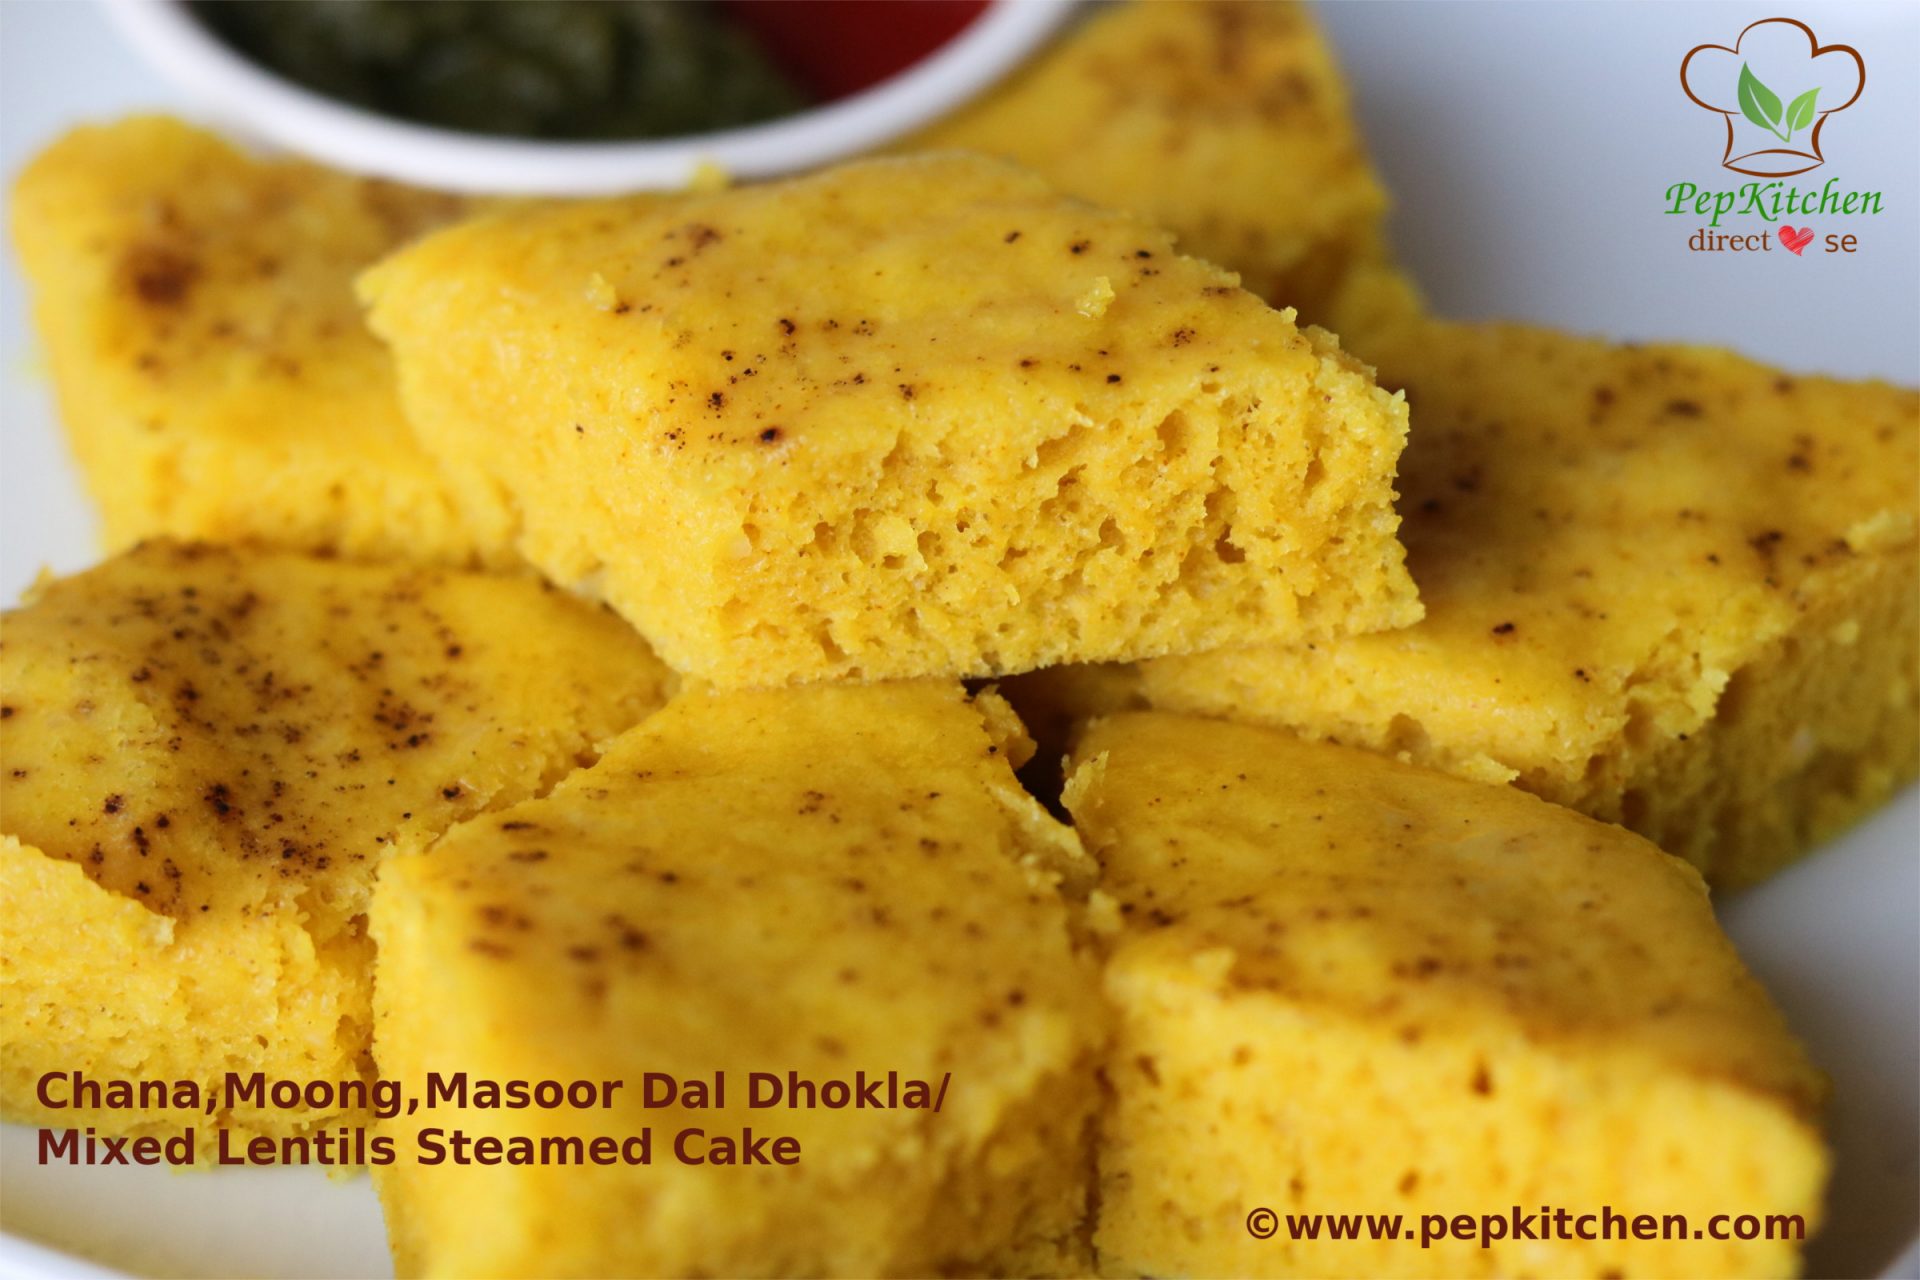 Chana, Moong, Masoor Dal Dhokla/Mixed Lentils Steamed Cake